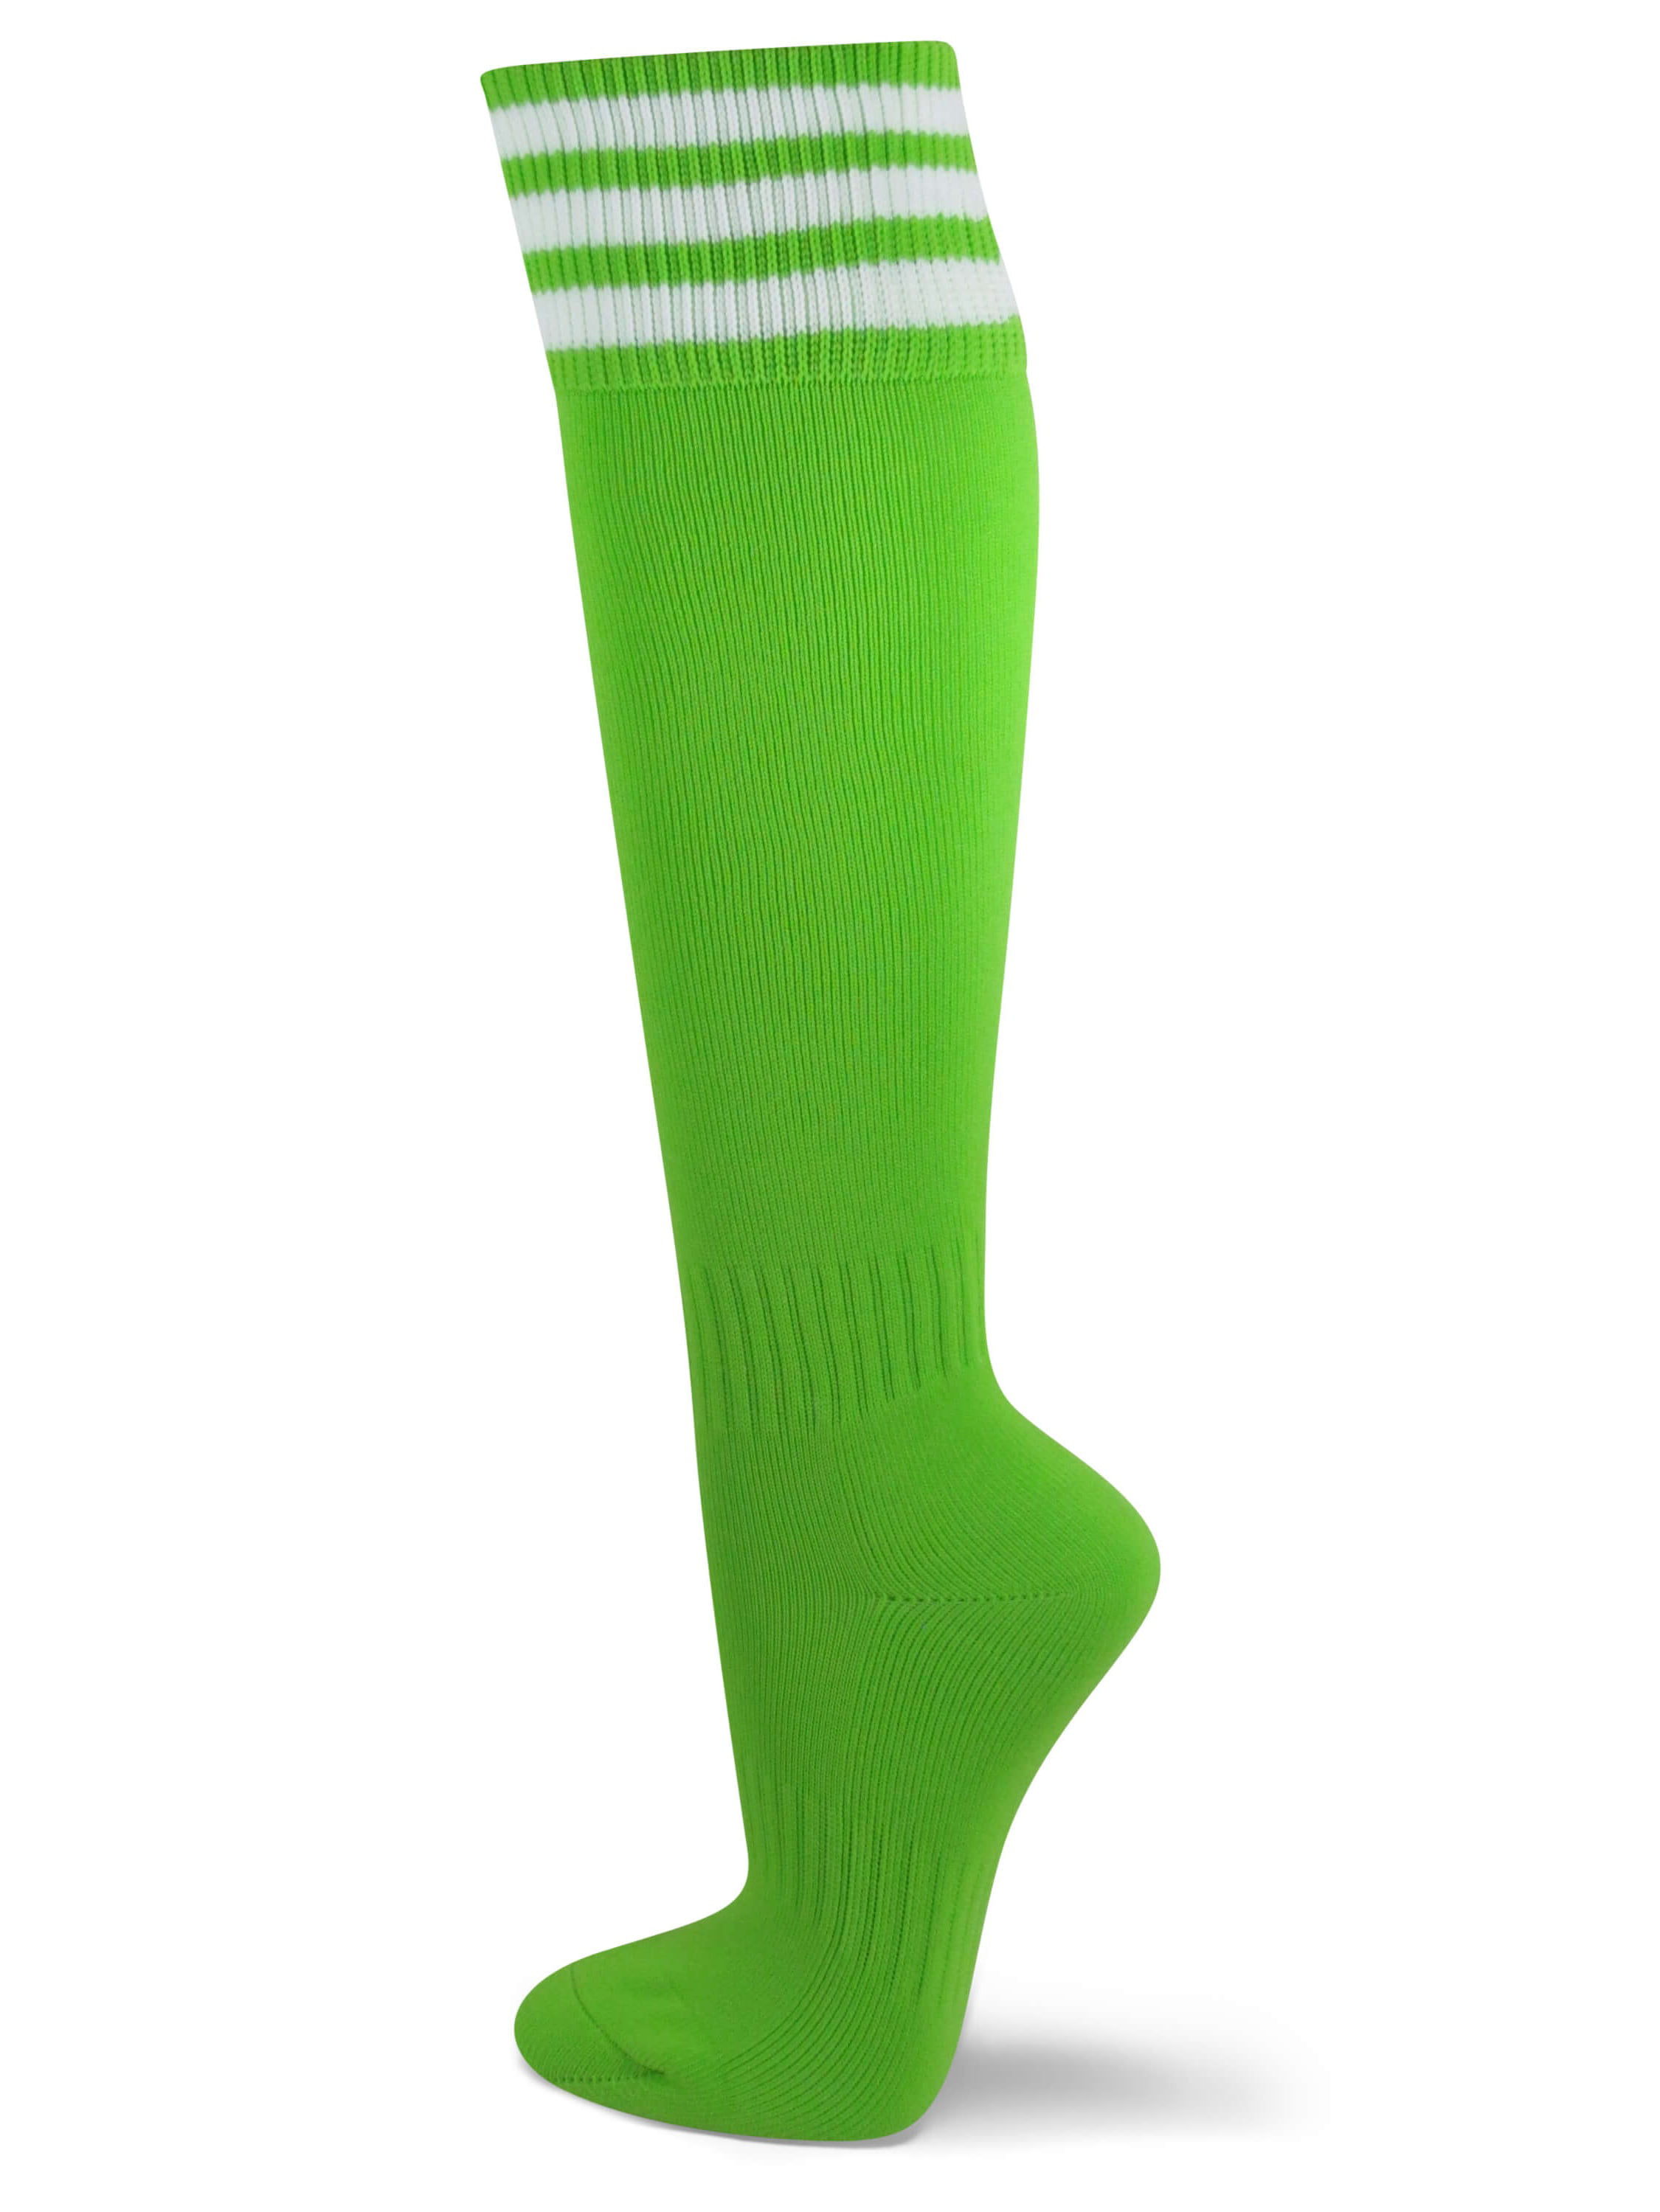 Pareberry Triple Stripes Soft Cotton Knee High Tube Socks for Men and Women 